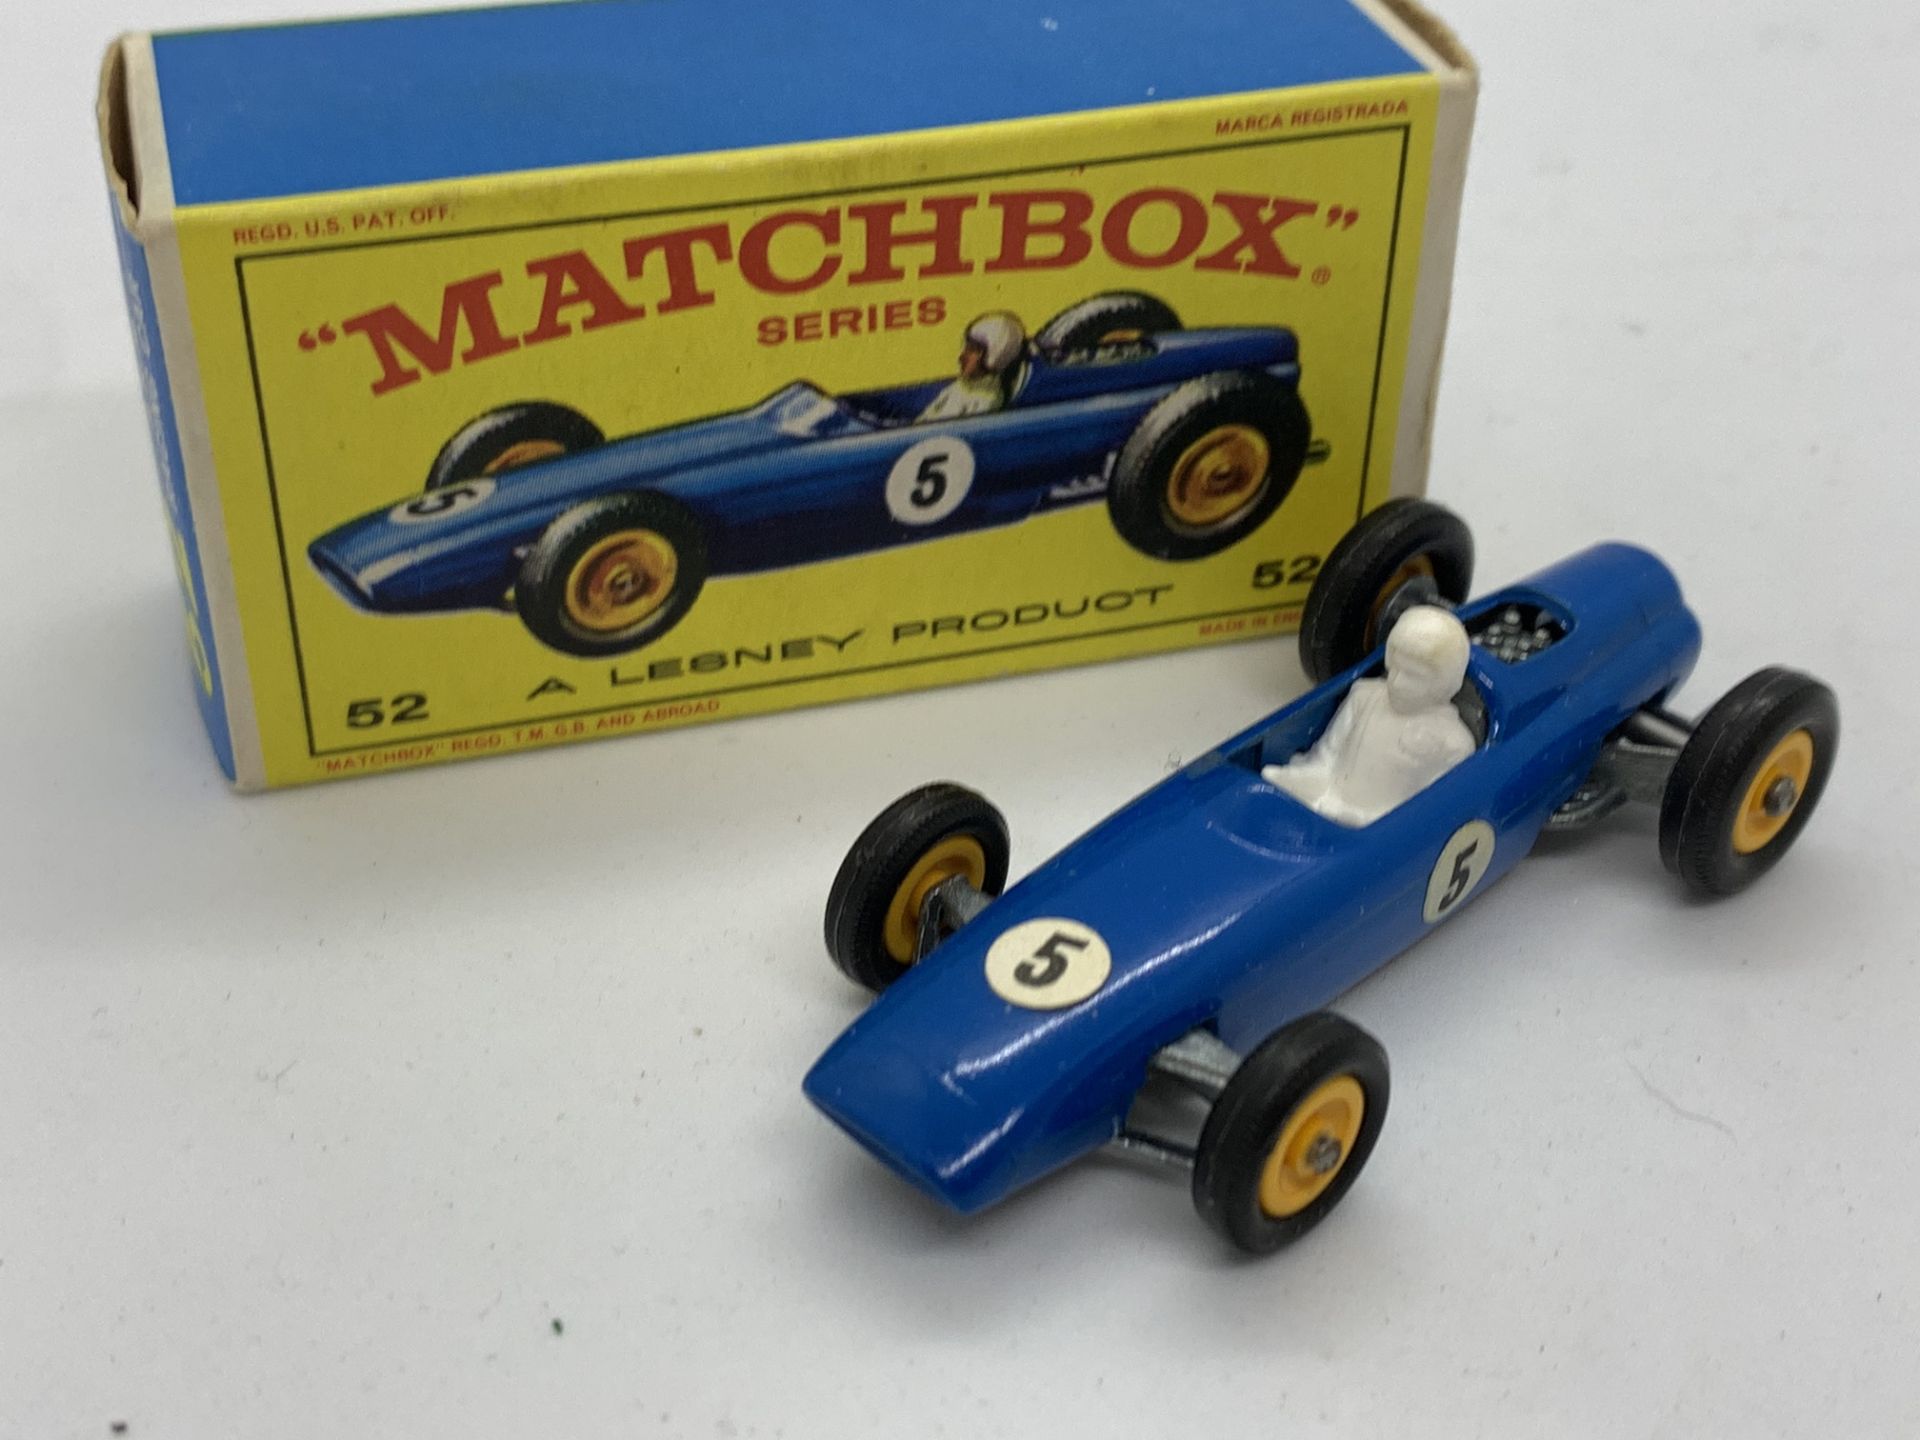 MATCHBOX B.R.M RACING CAR NO 52 WITH ORIGINAL BOX - NO RESERVE